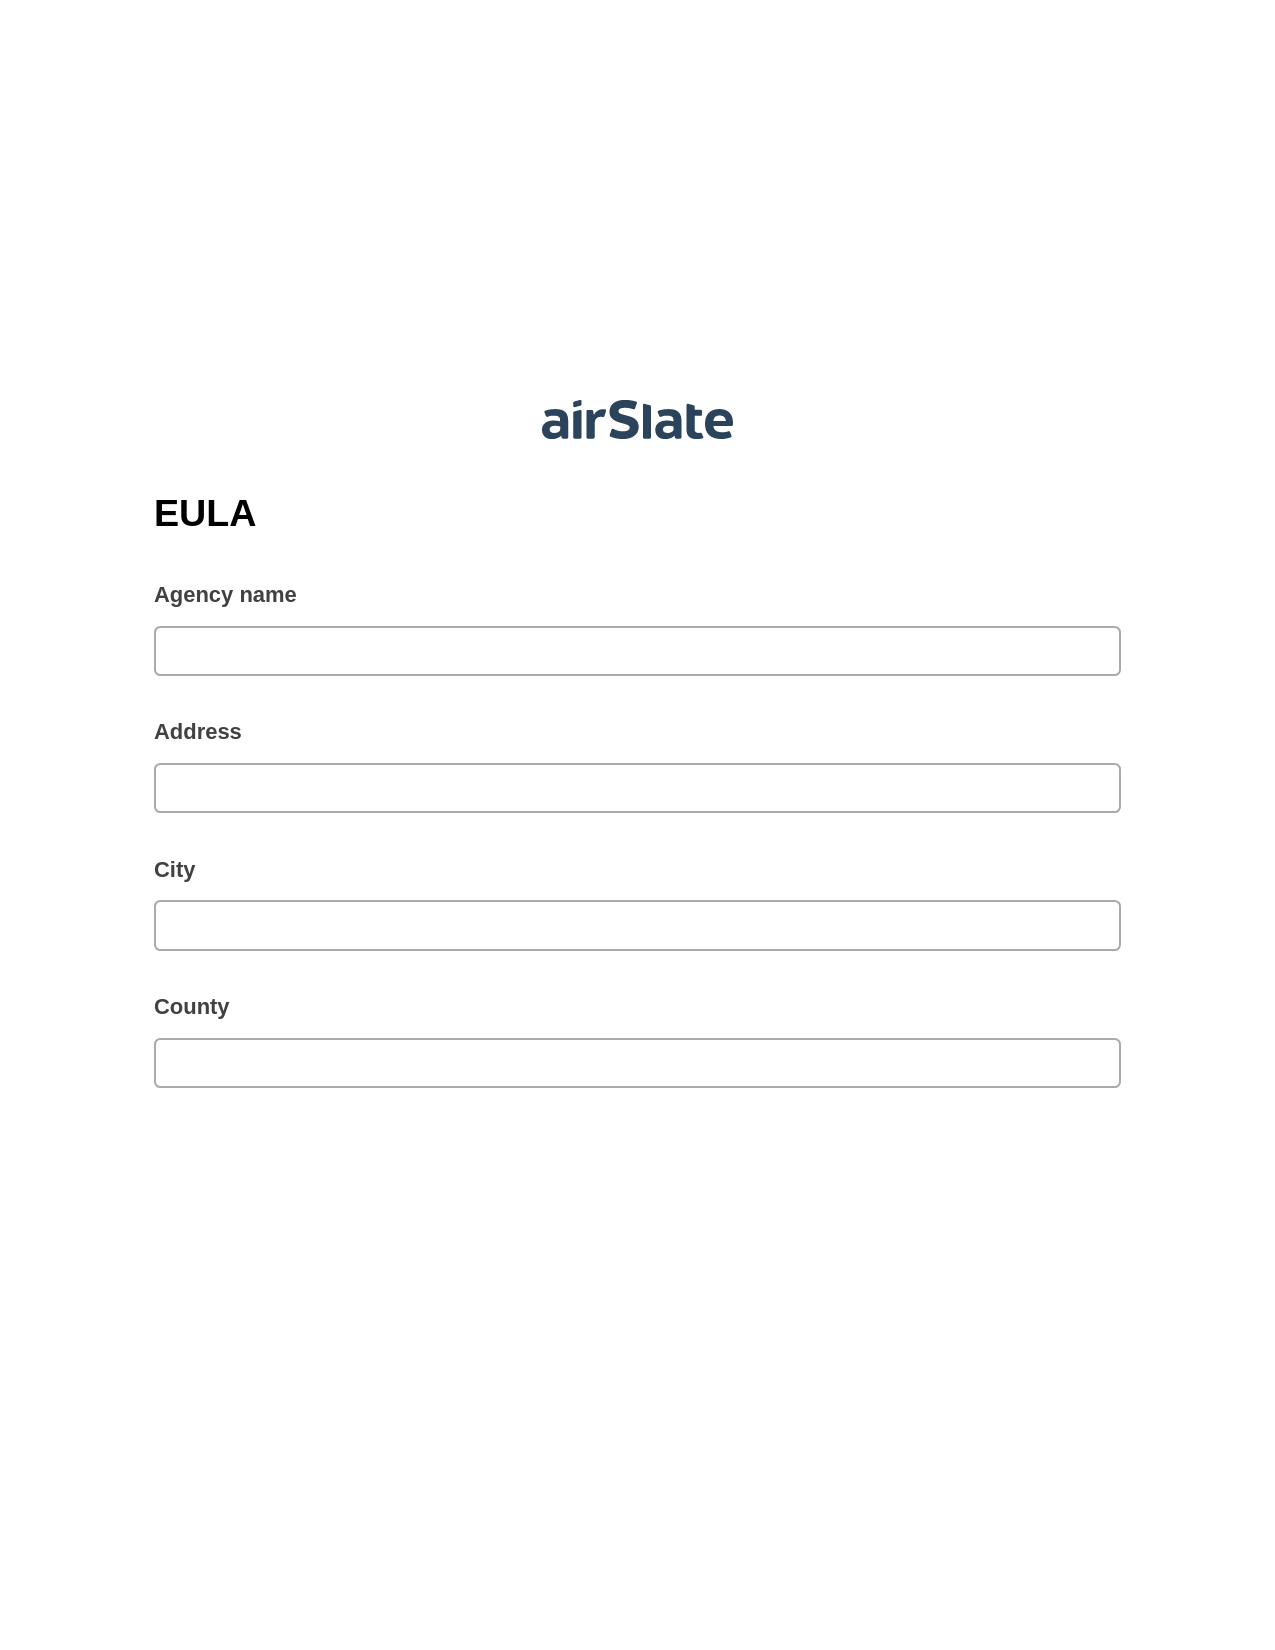 Multirole EULA Pre-fill from CSV File Bot, Reminder Bot, Export to Smartsheet